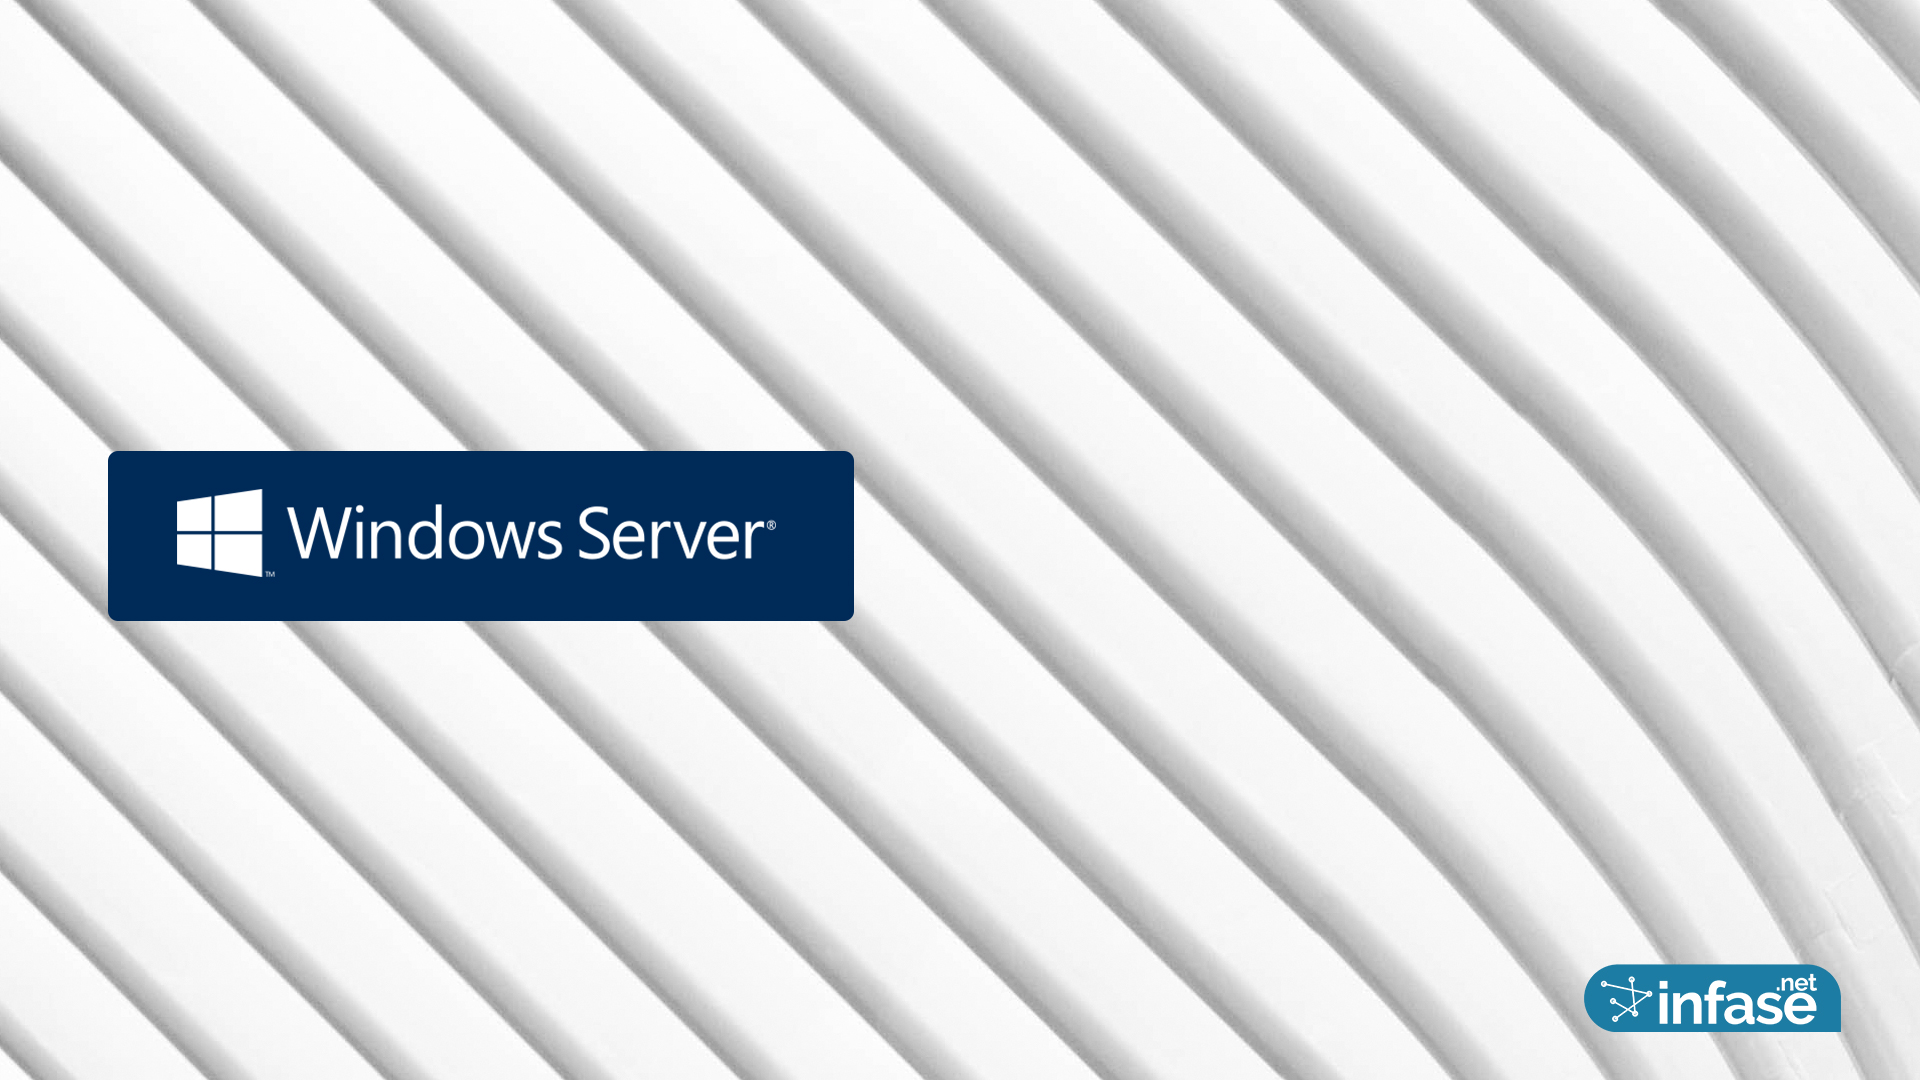 Fondo de pantalla Windows Server